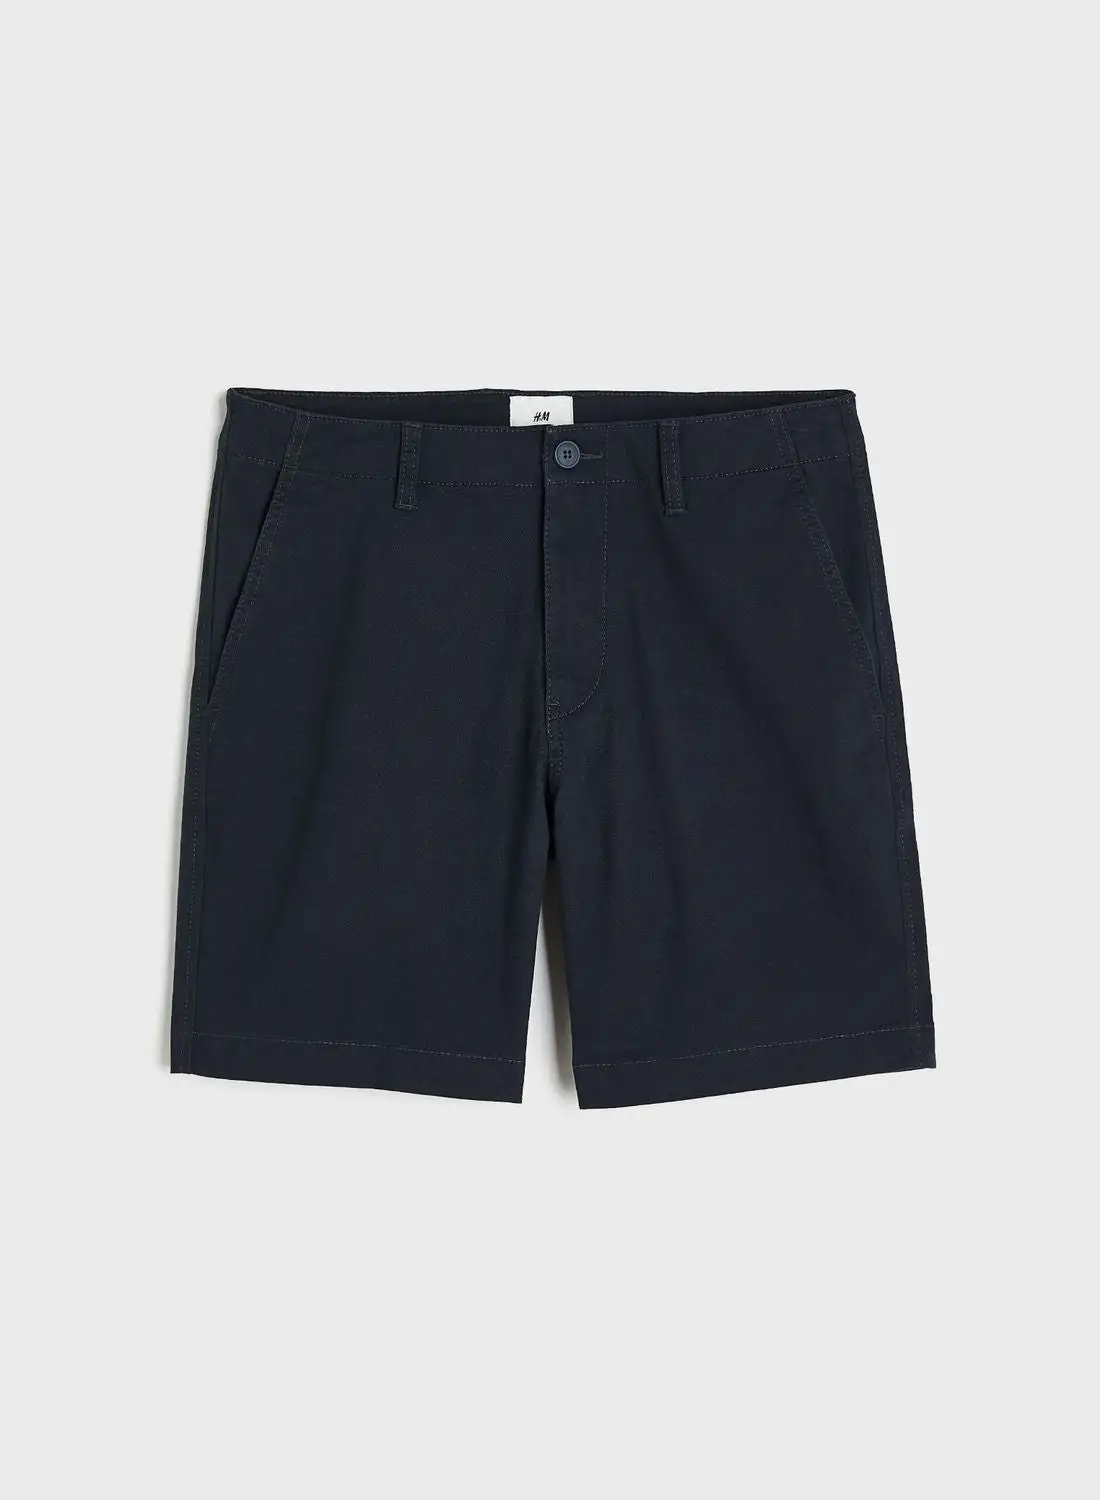 H&M Regular Fit Shorts